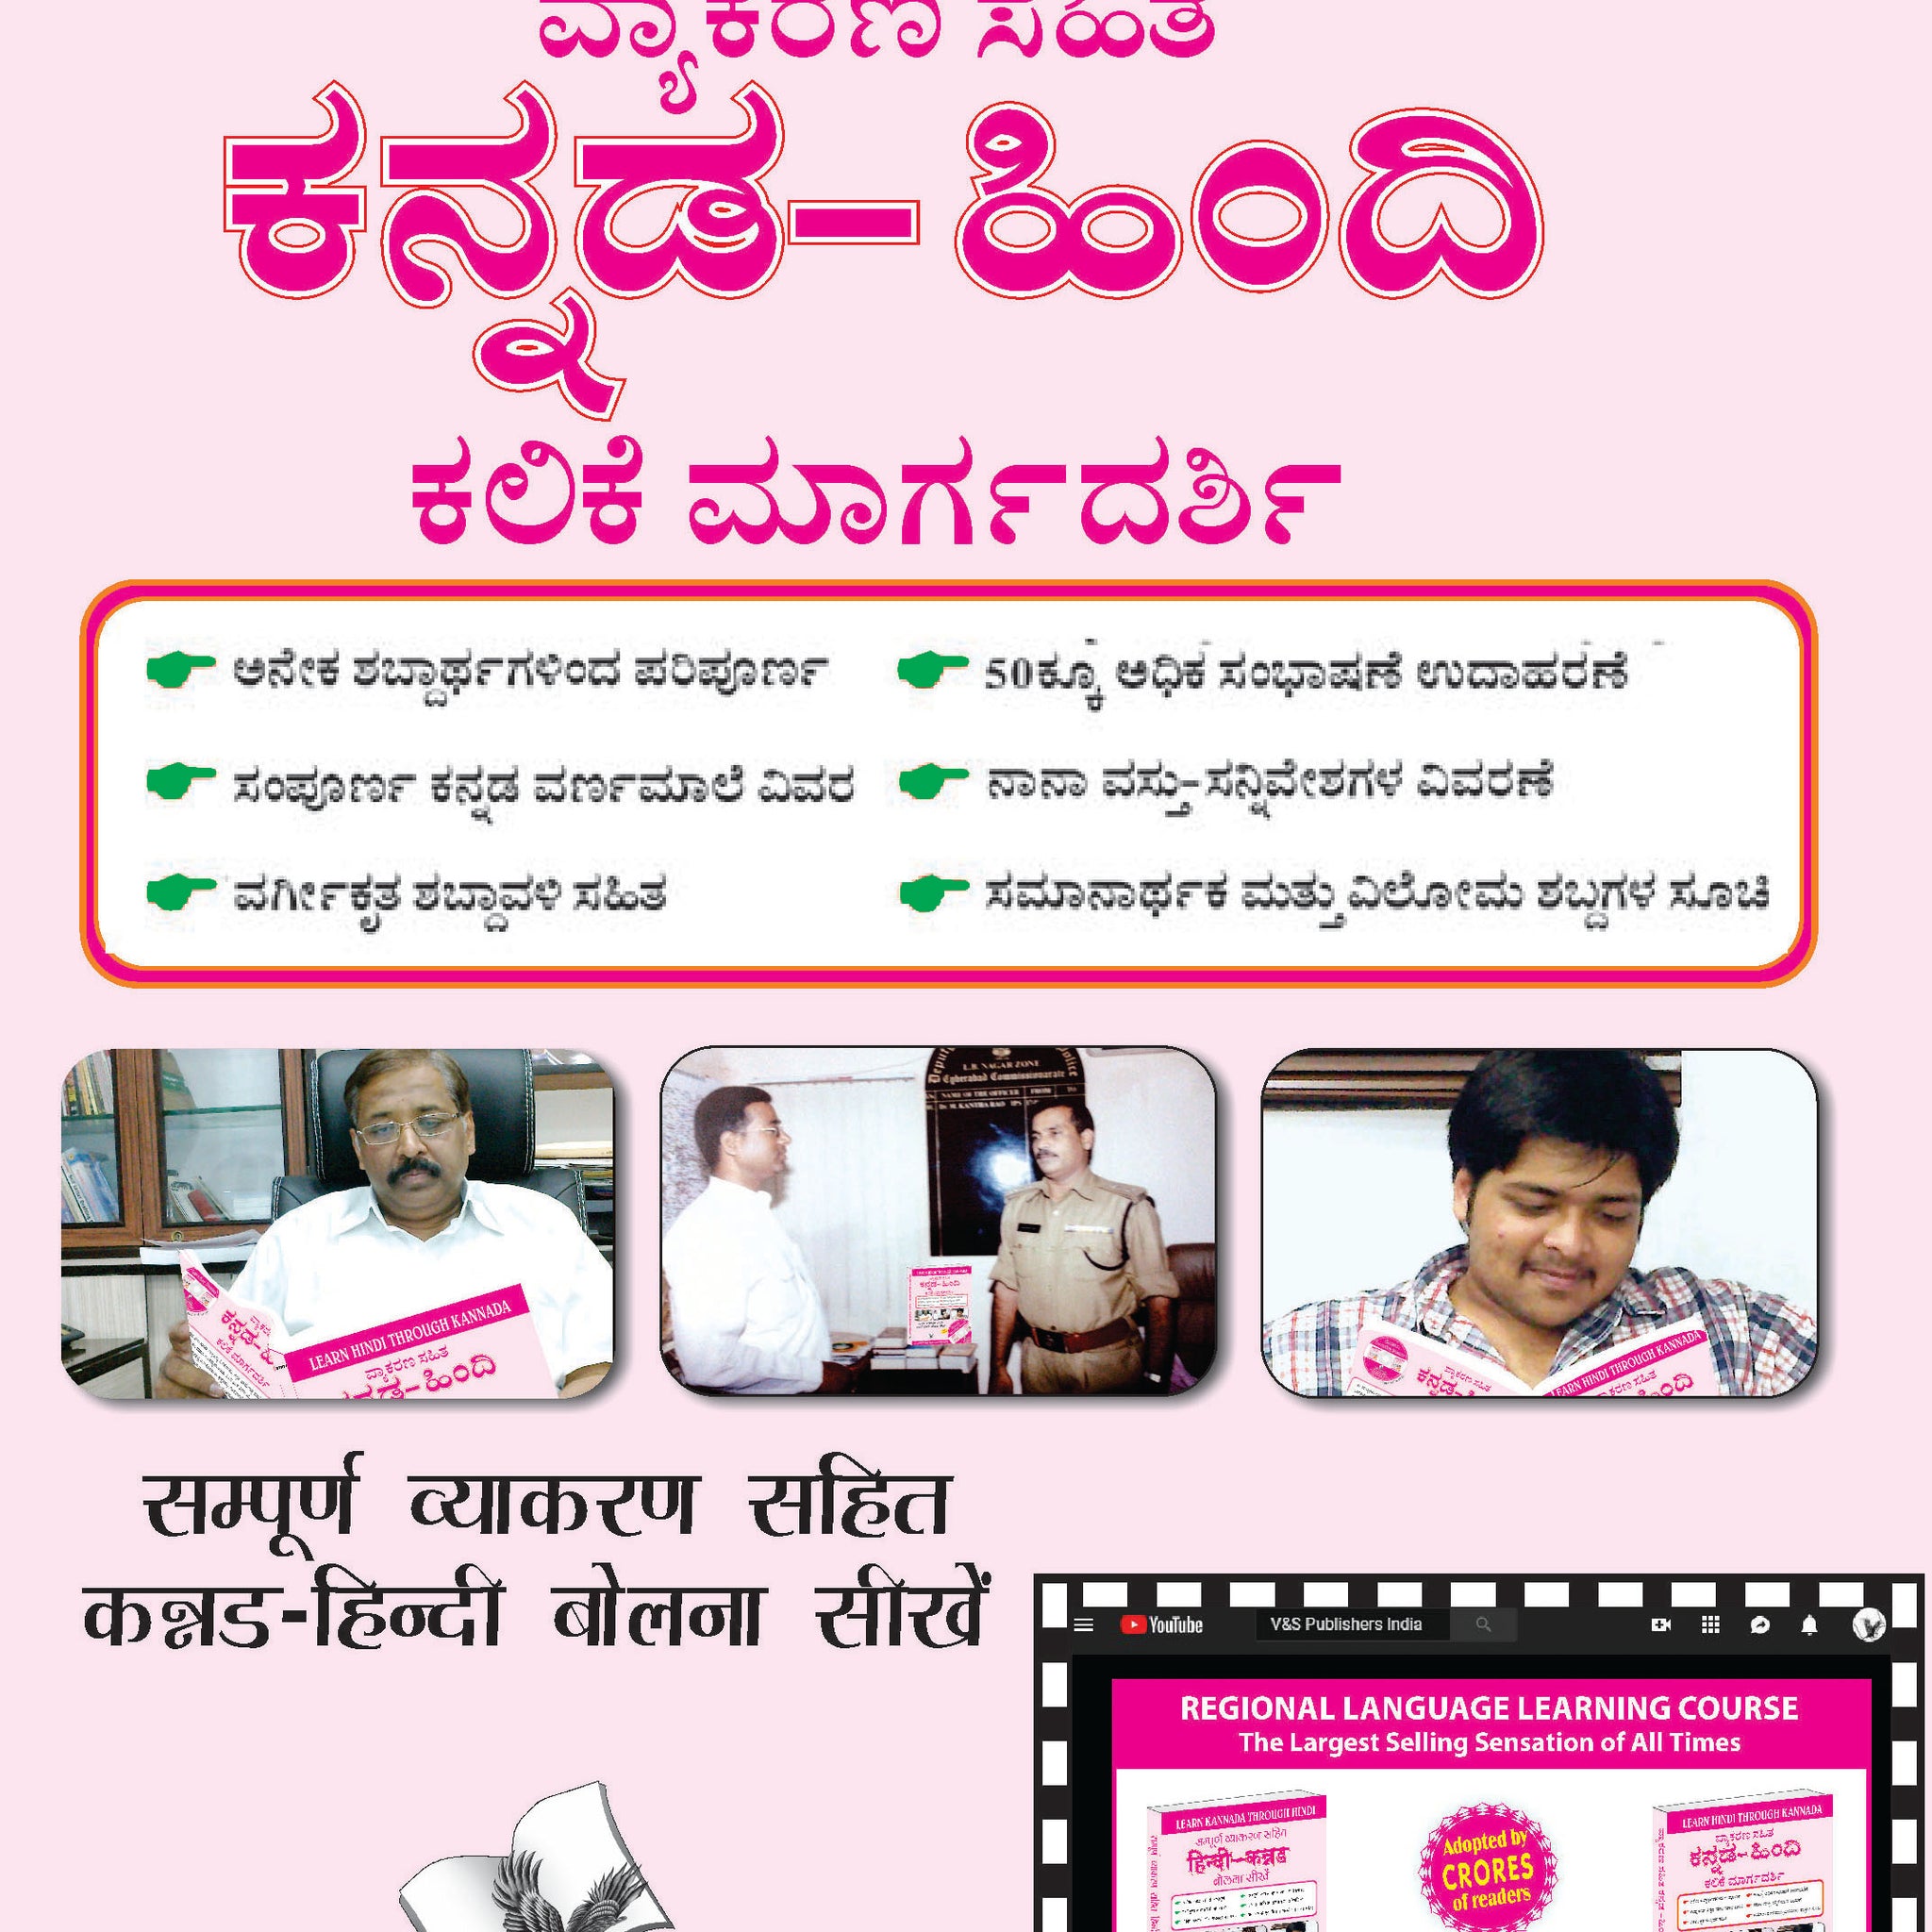 Learn Hindi Through Kannada(Kannada To Hindi Learning Course) (With Youtube AV)